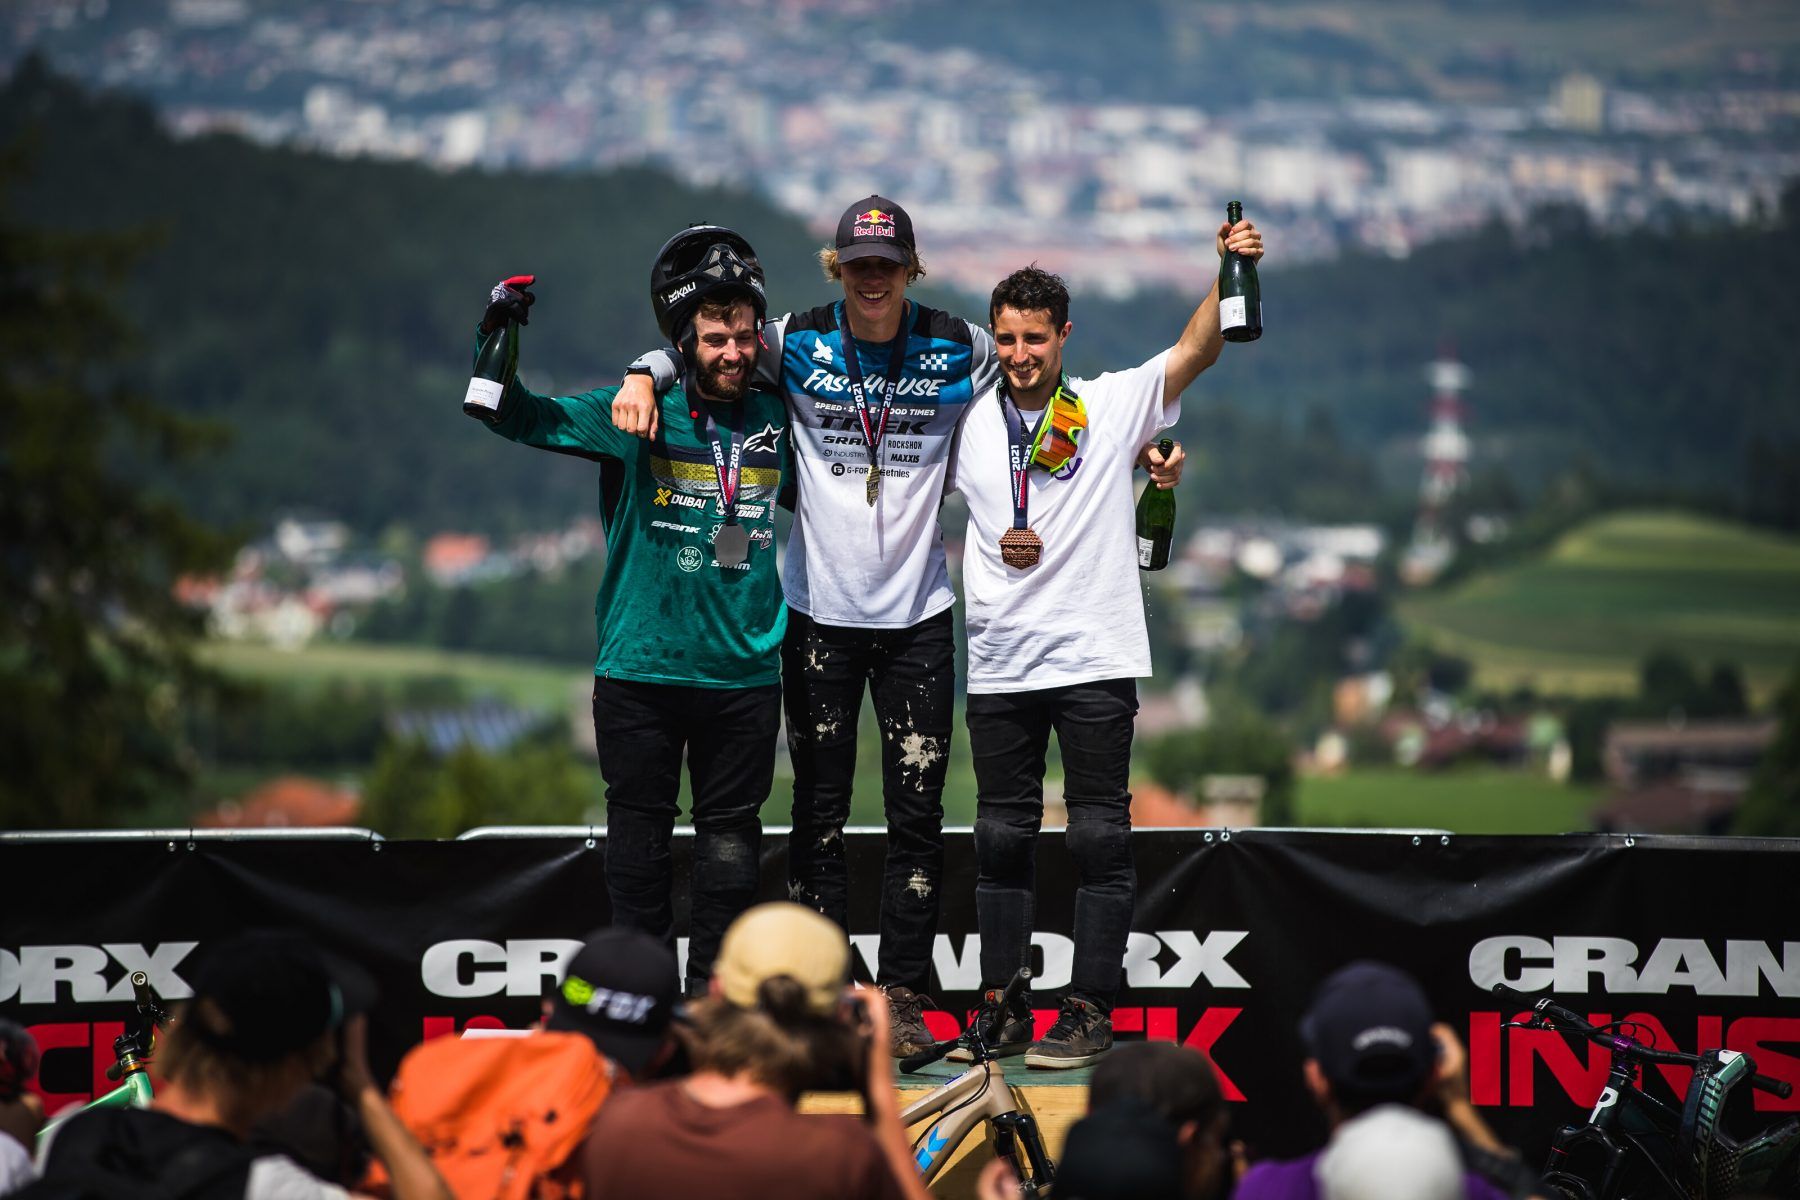 Crankworx Innsbruck Slopestyle podium